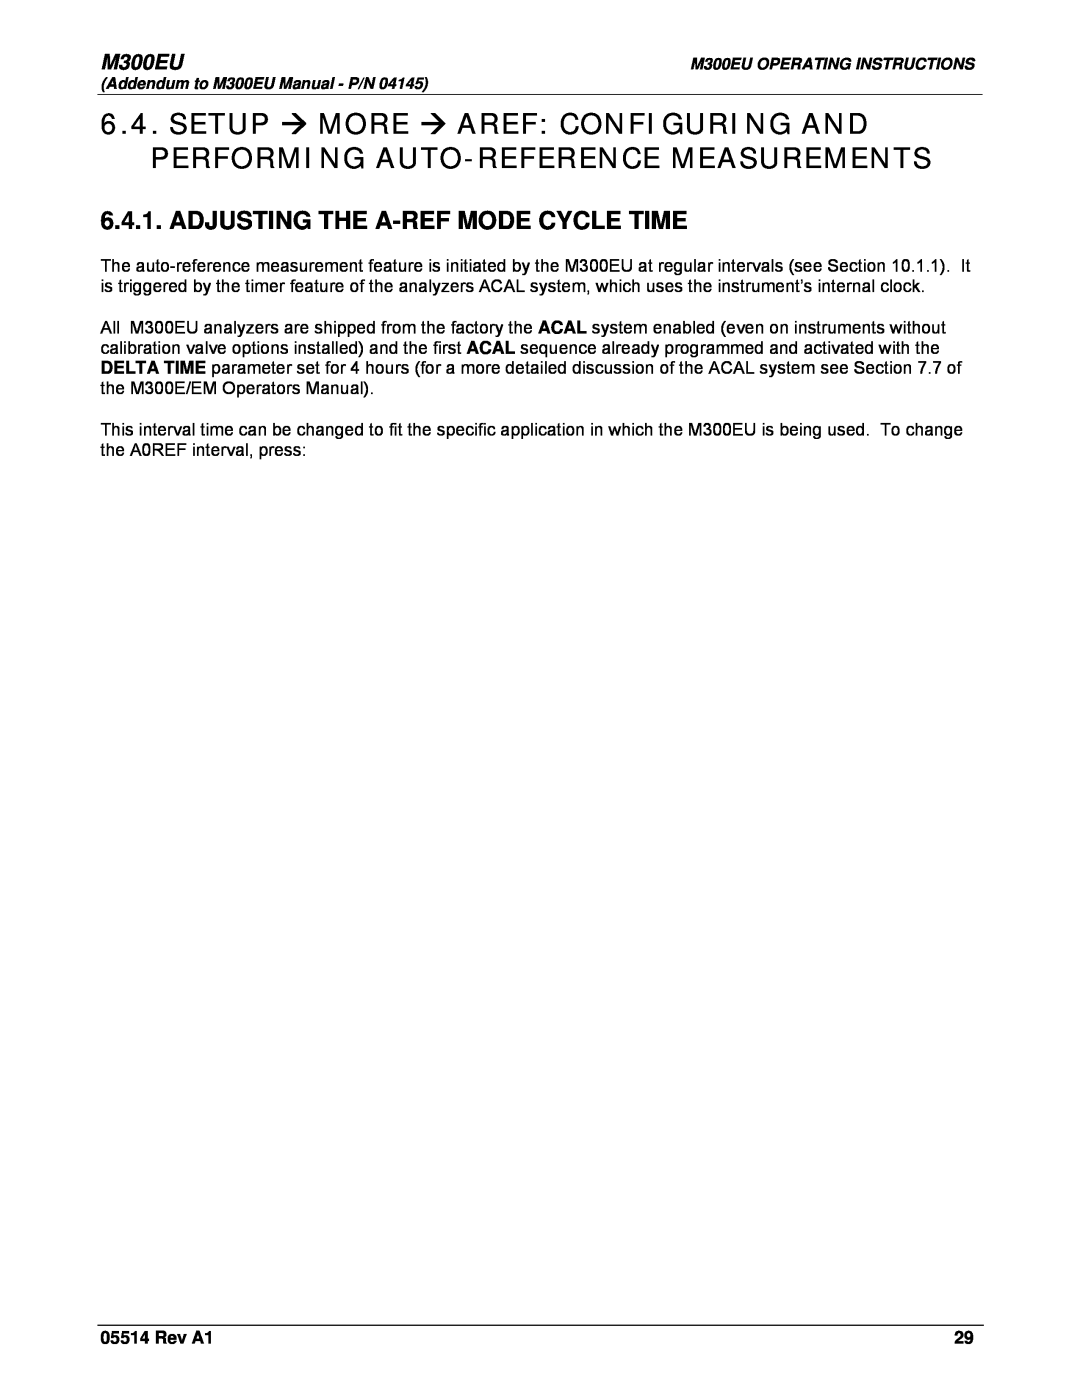 Teledyne Model 300EU manual Adjusting The A-Ref Mode Cycle Time, M300EU, Rev A1 